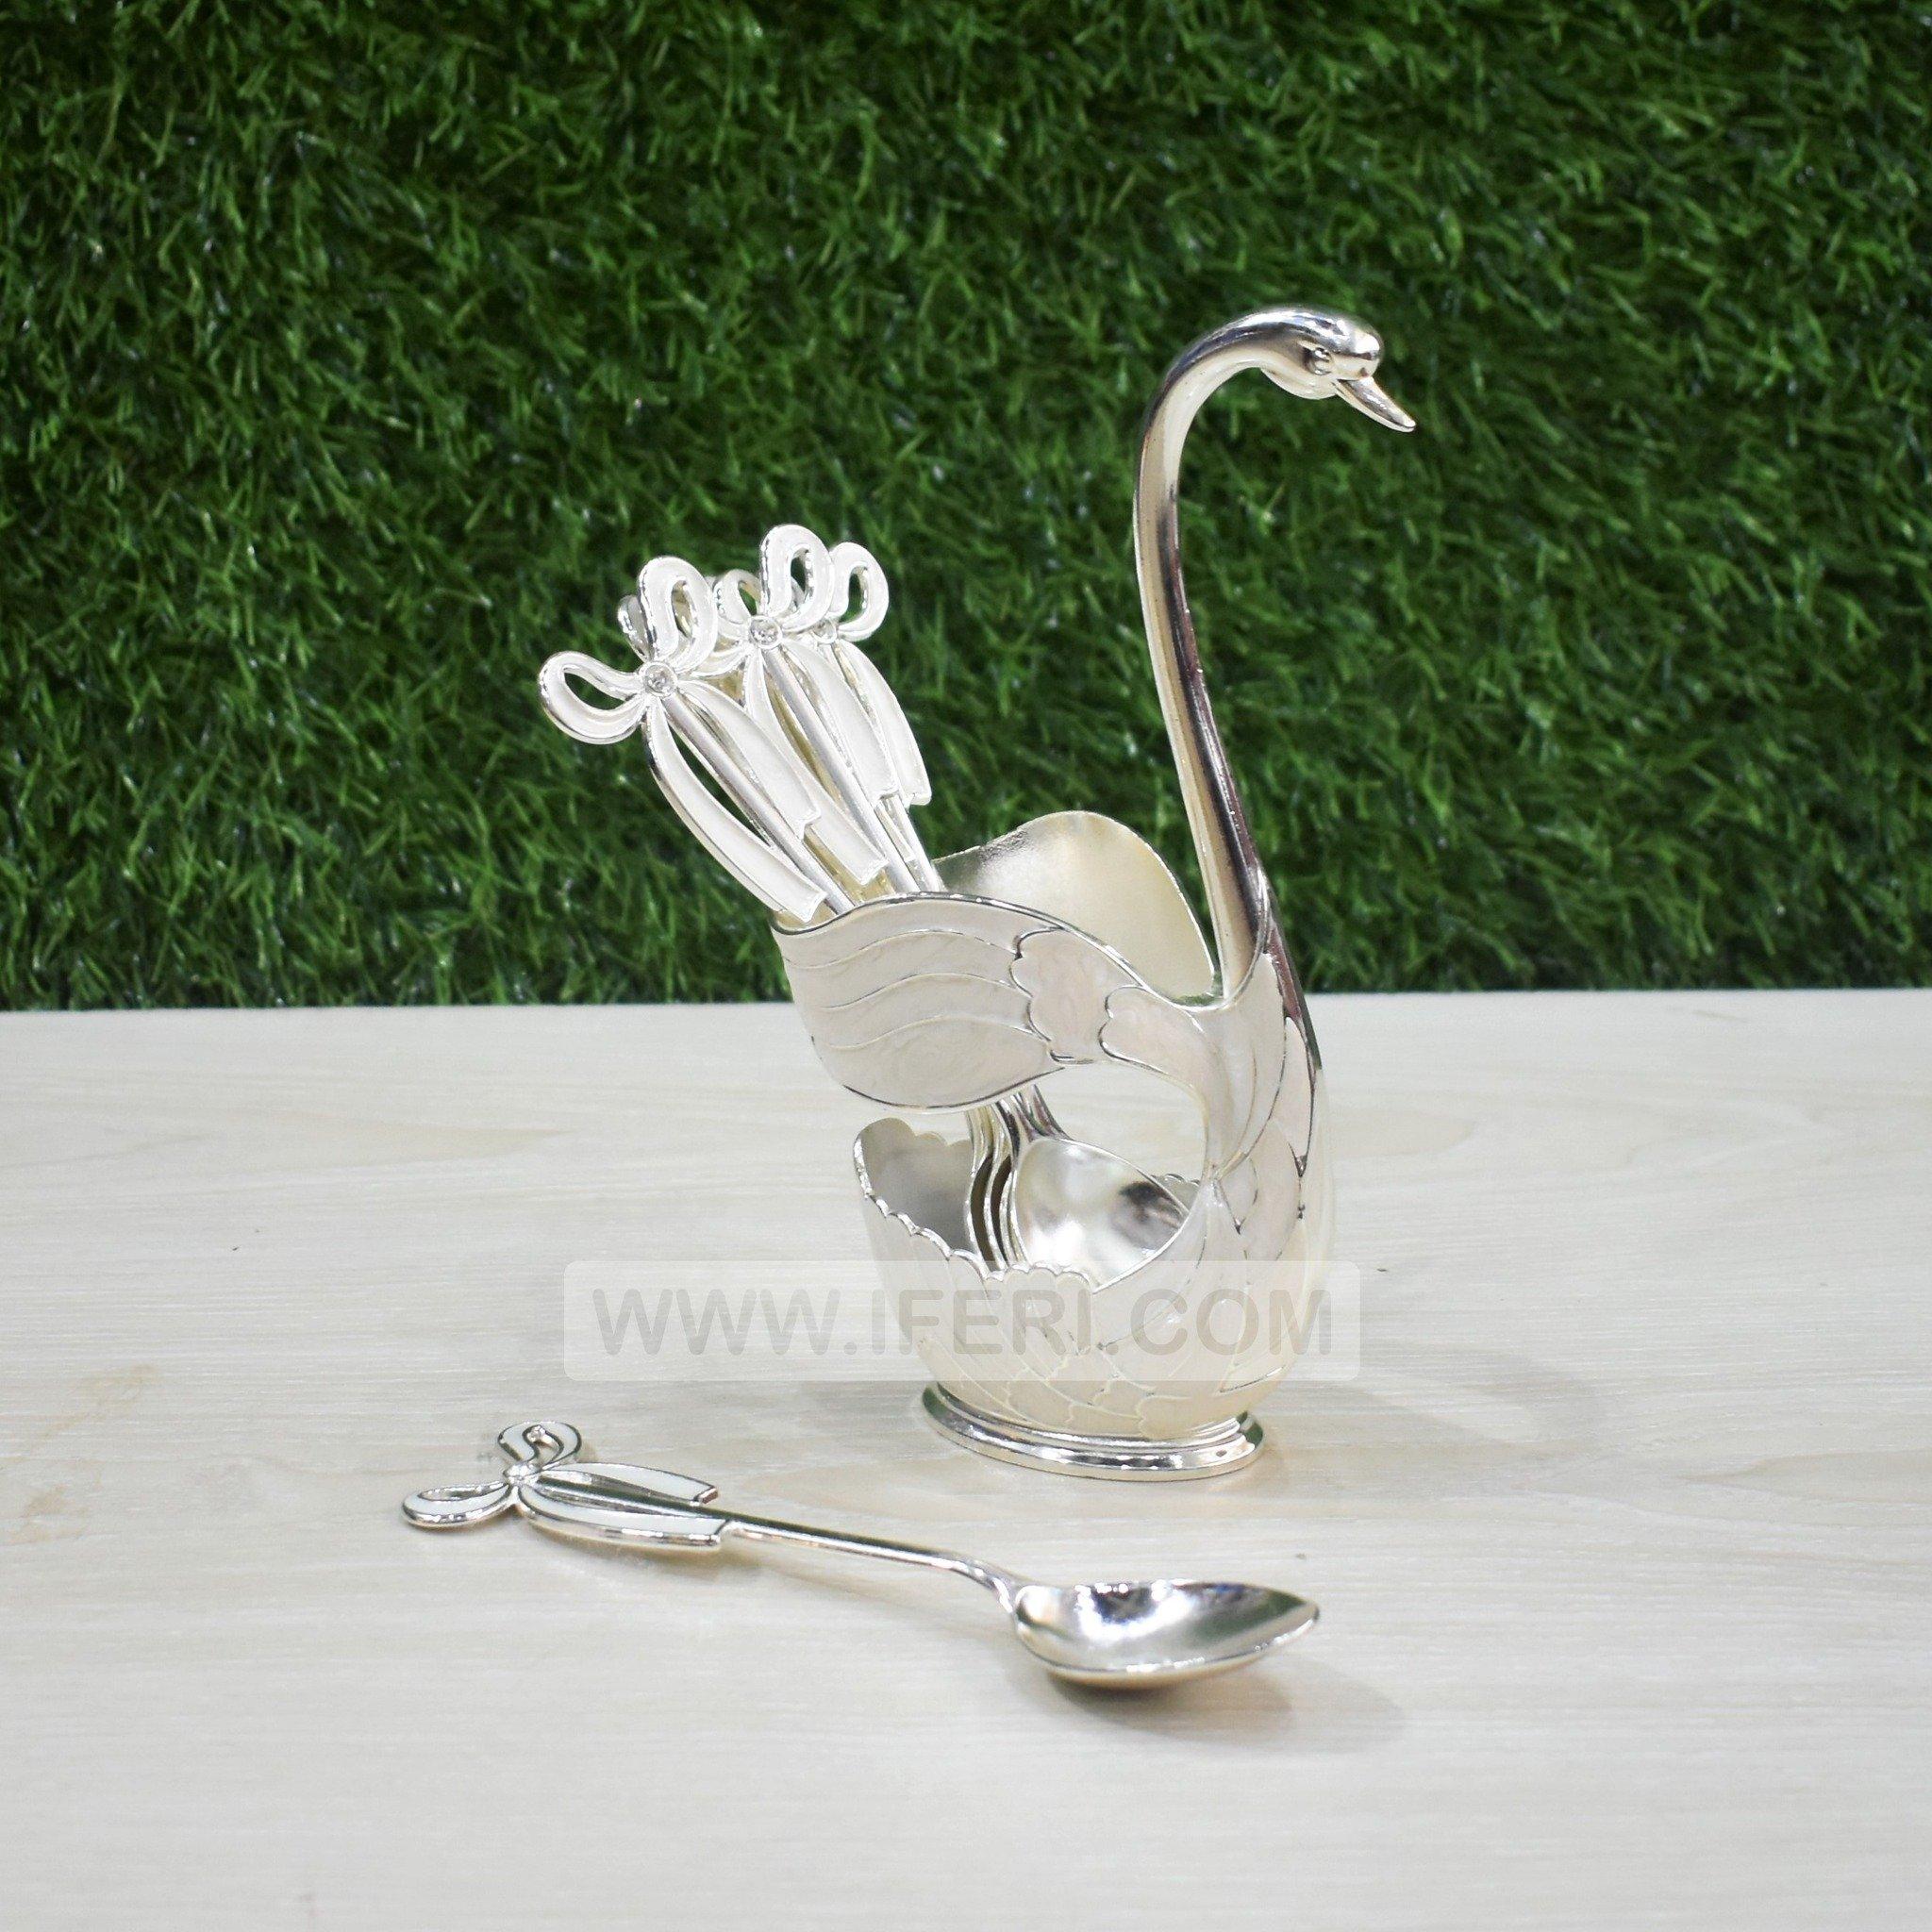 Swan Decorative Spoon Set RR6786 - Price in BD at iferi.com